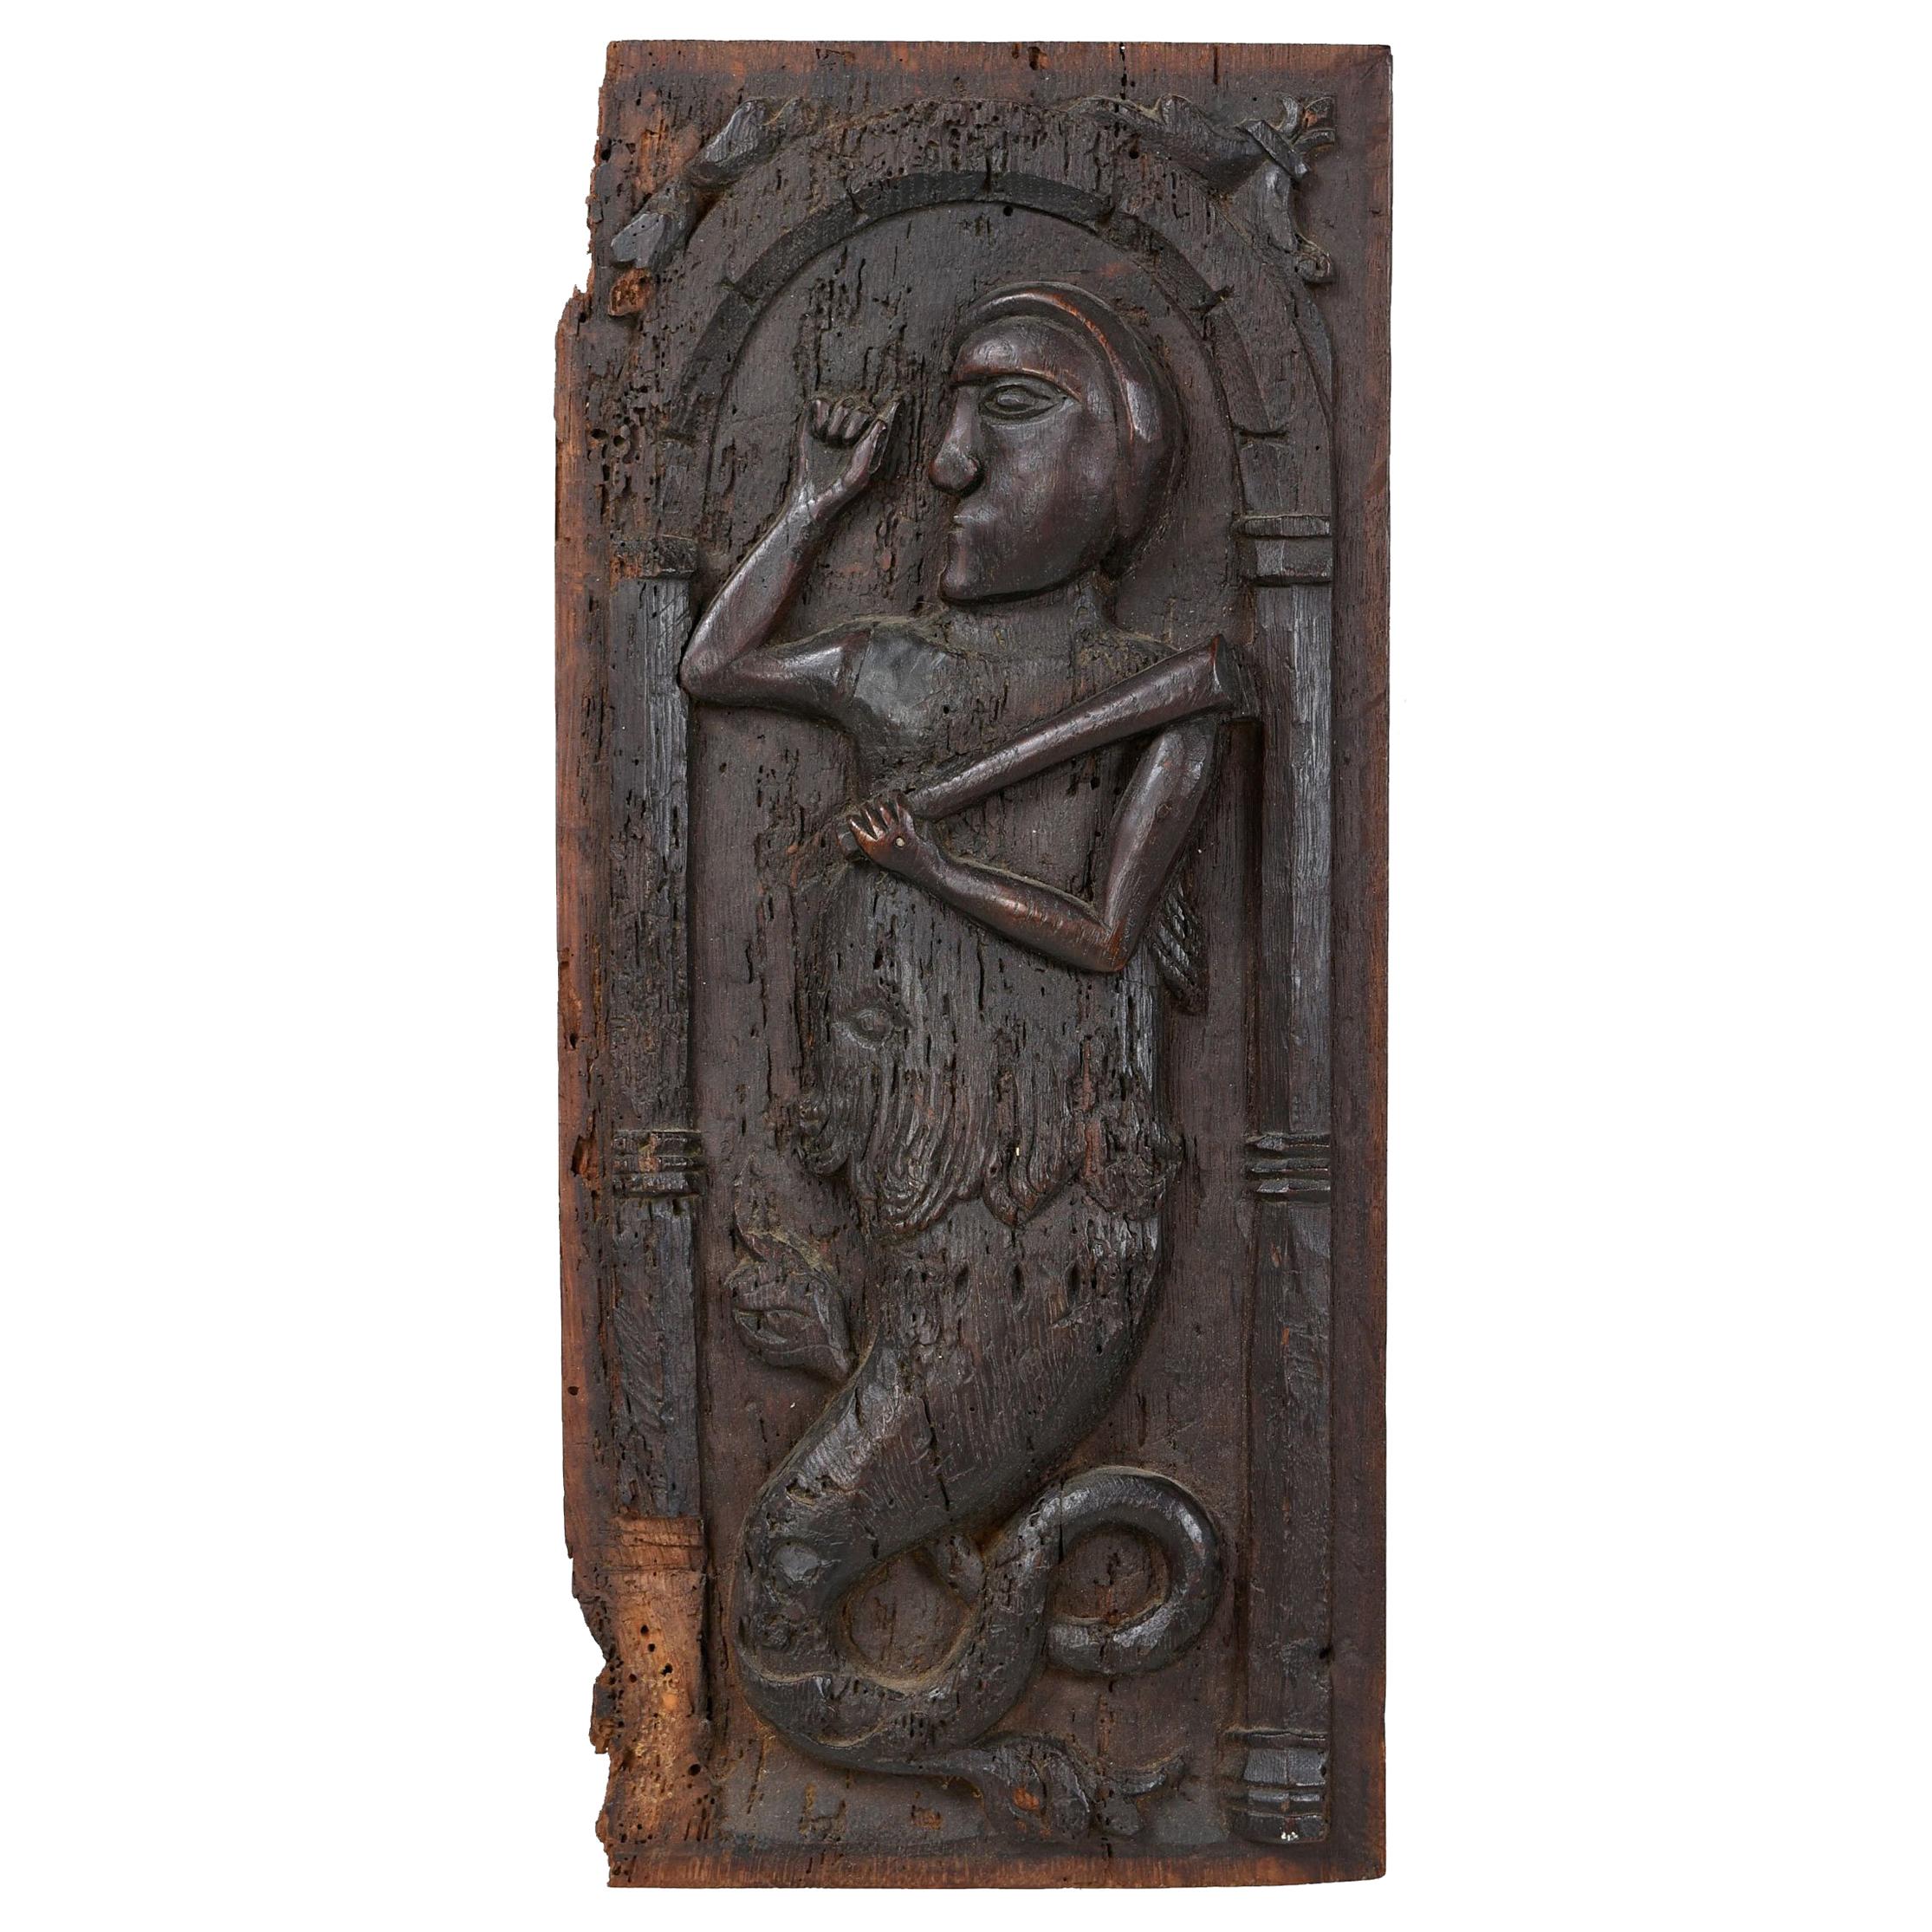 Medieval Aquatic Wildman or Merman Pagan Wood Carving